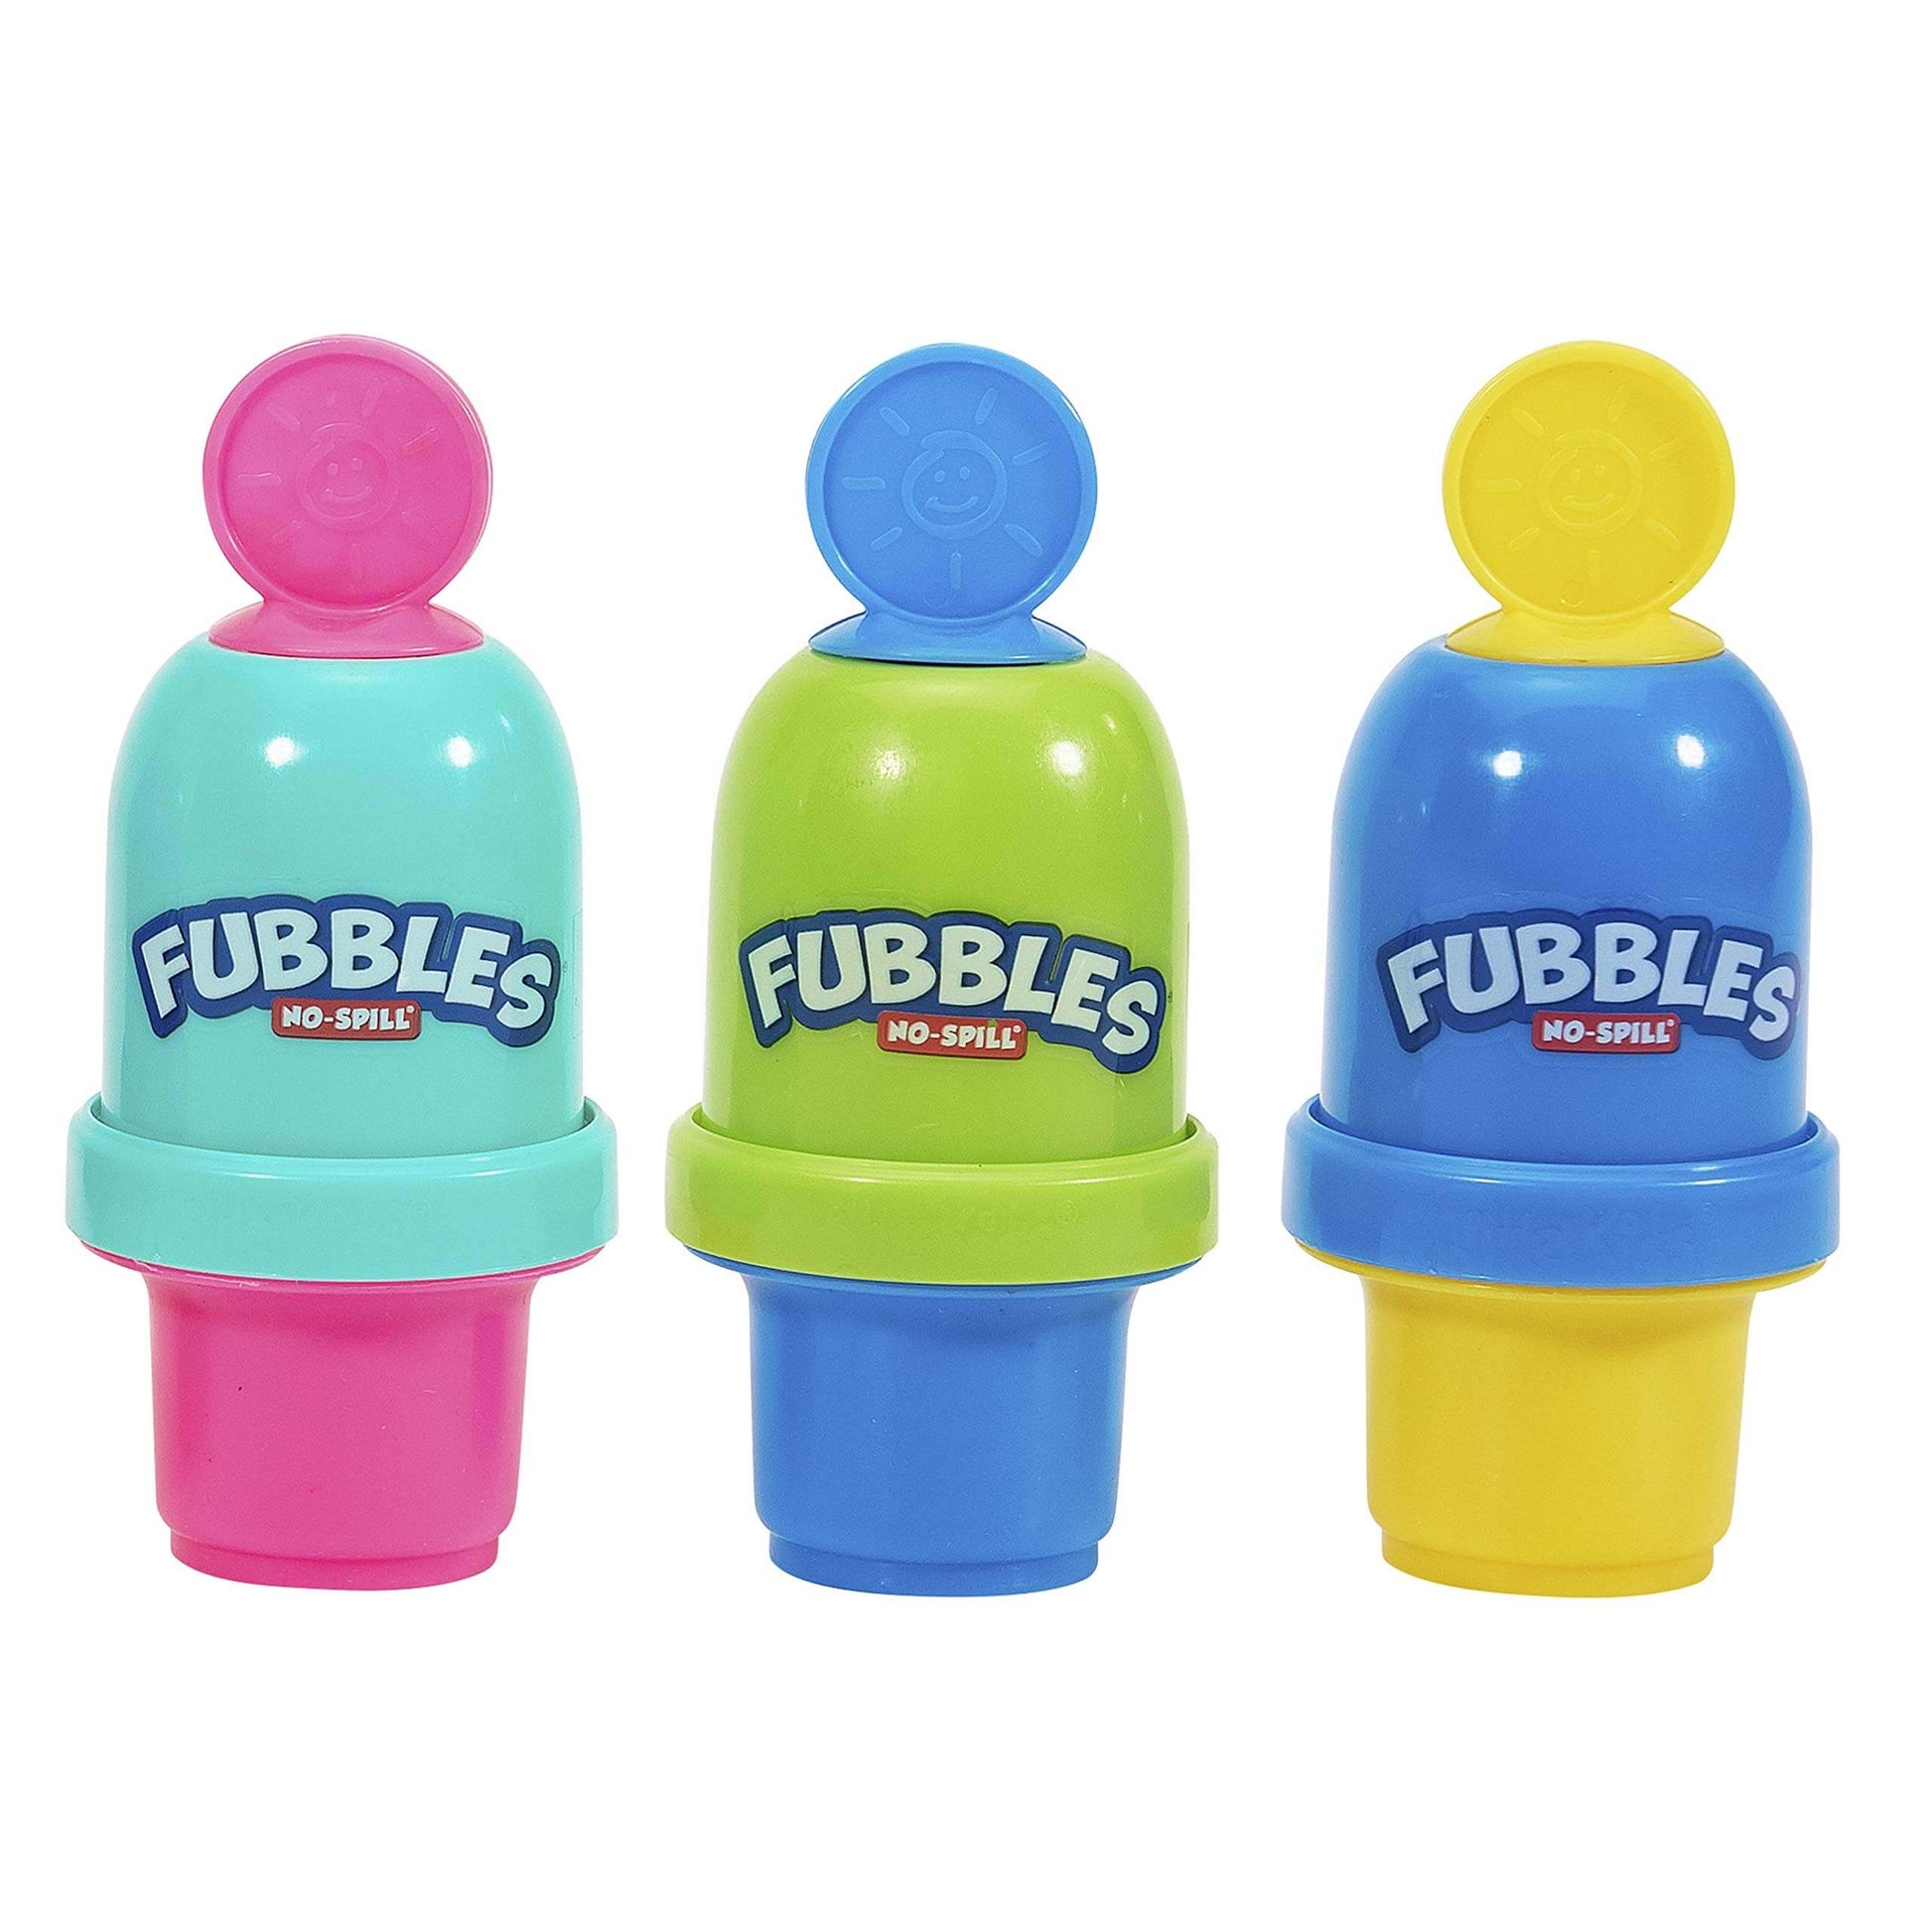 Fubbles No Spill Mini Bubble Tumbler available at Bear & Moo